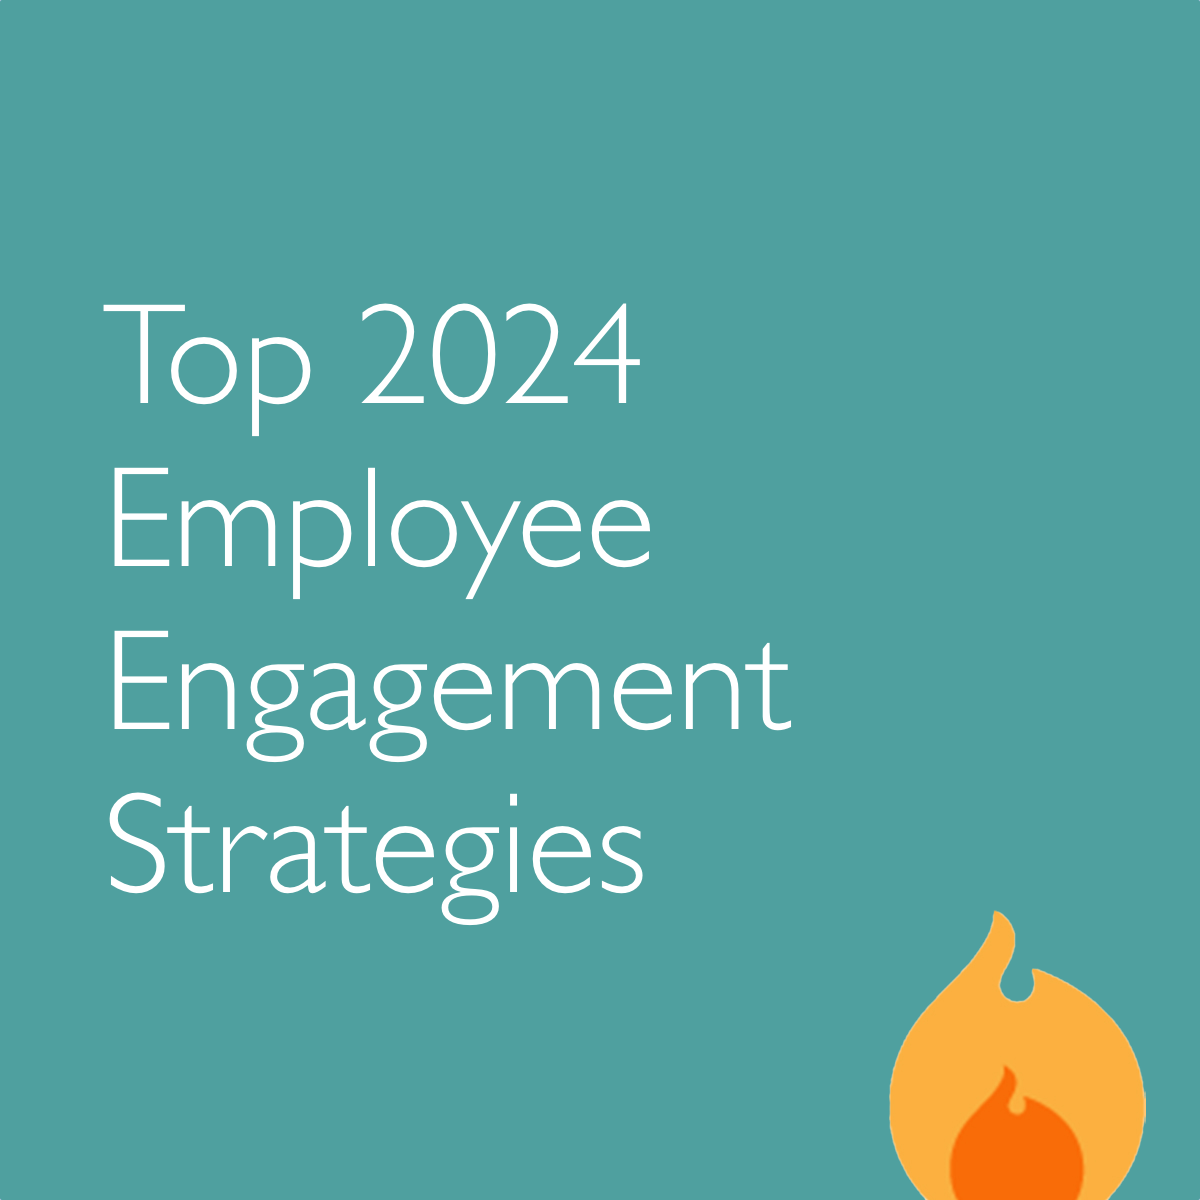 Top 2024 Employee Engagement Strategies